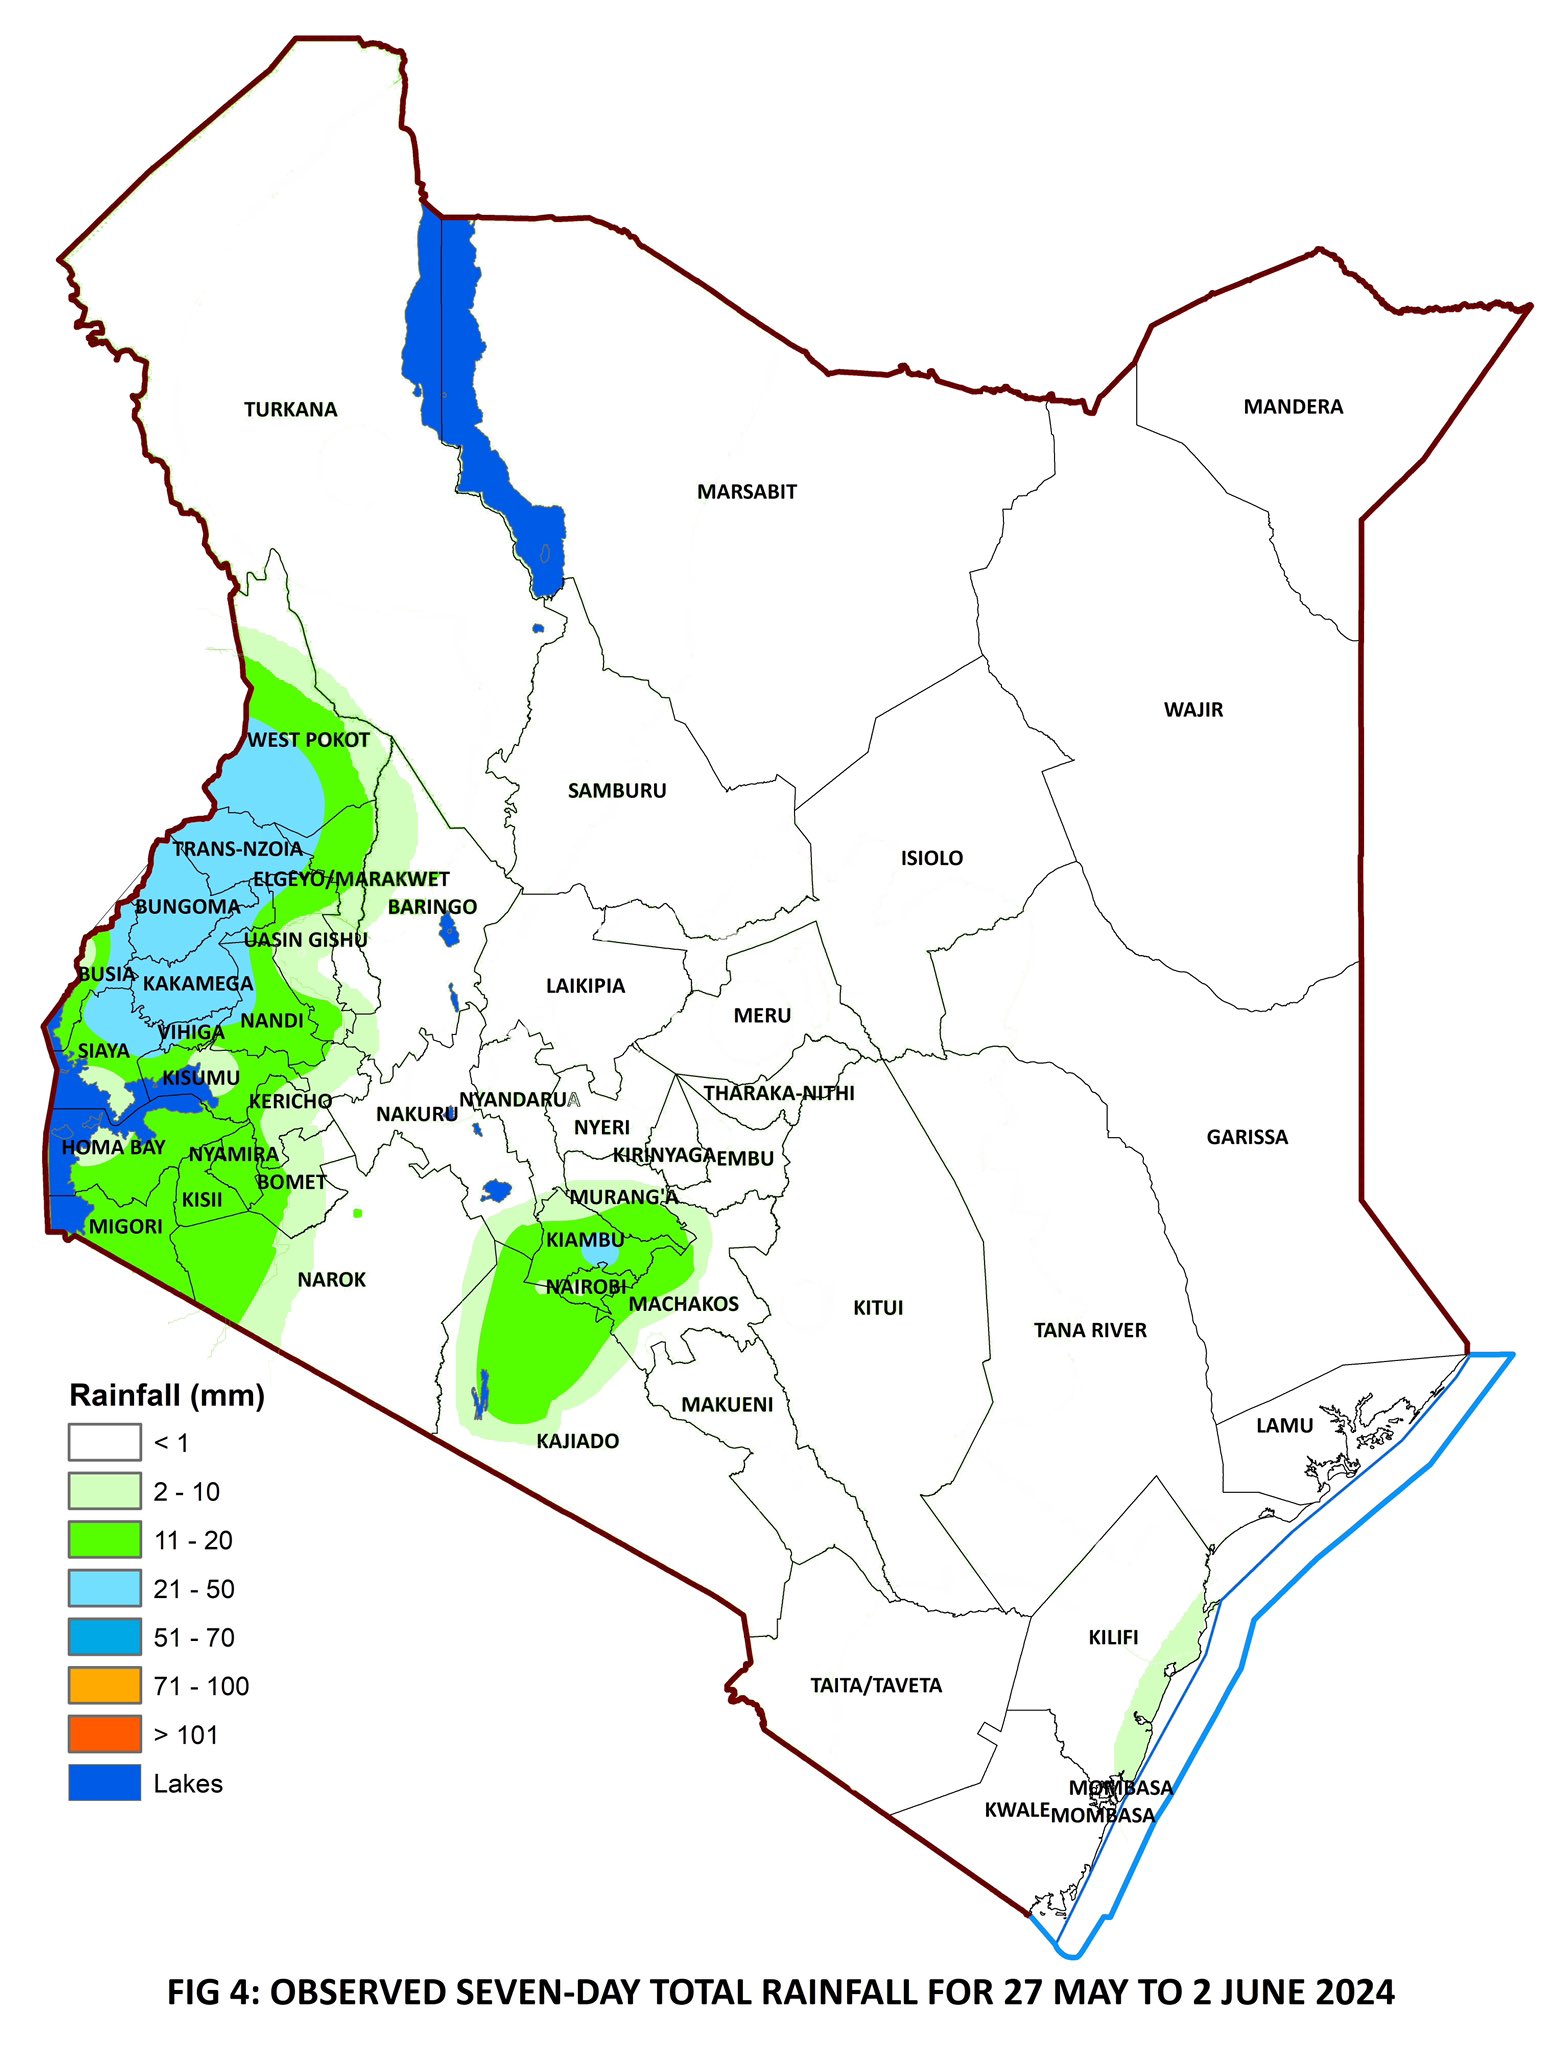 Kenya Meteorological Department Predicts Dry Week Ahead with Scattered Rainfall Areas